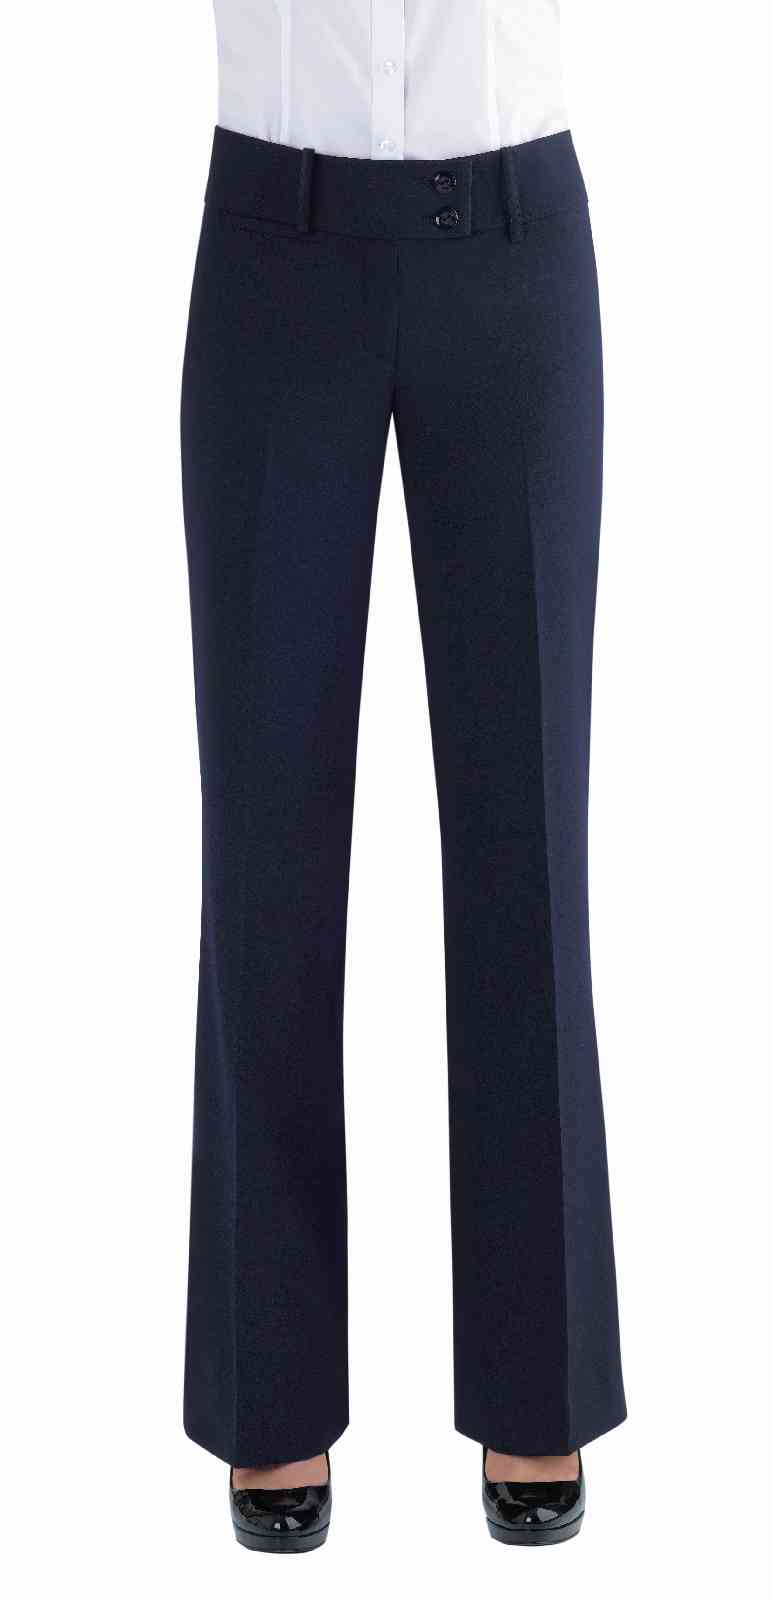 Brook Tavener 2188 Andretta Parallel Leg Ladies Trousers Navy Size 14 Regular